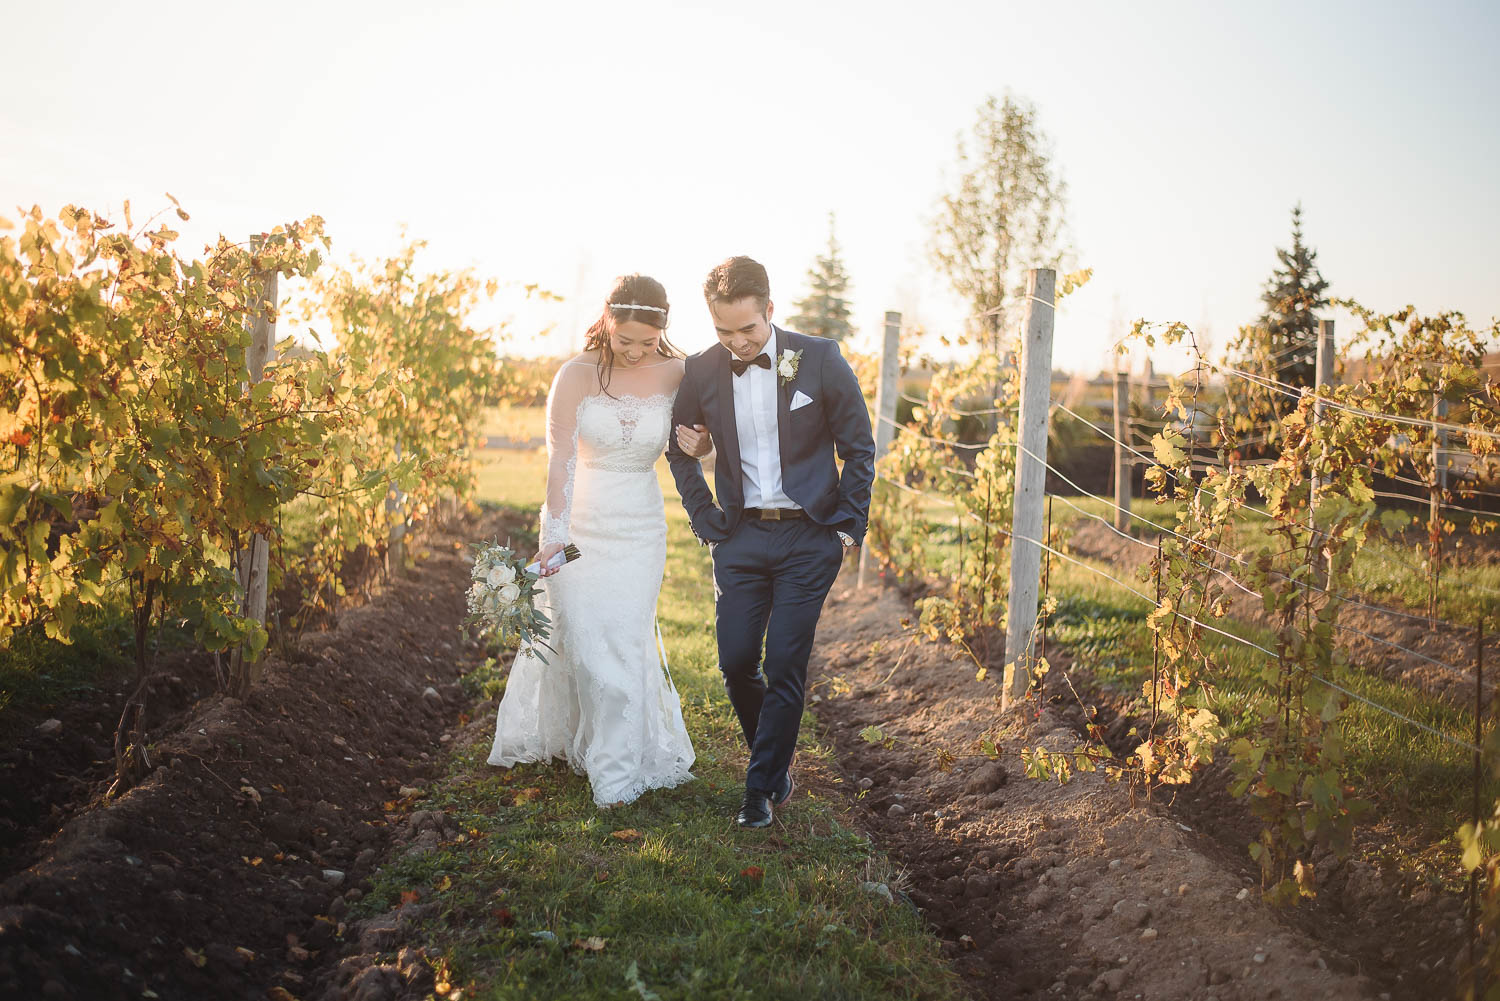 Sunset Wedding Portraits | Outdoor Romantic Winery Wedding | Brampton, Toronto, GTA Wedding Photographer | Eneira Photography